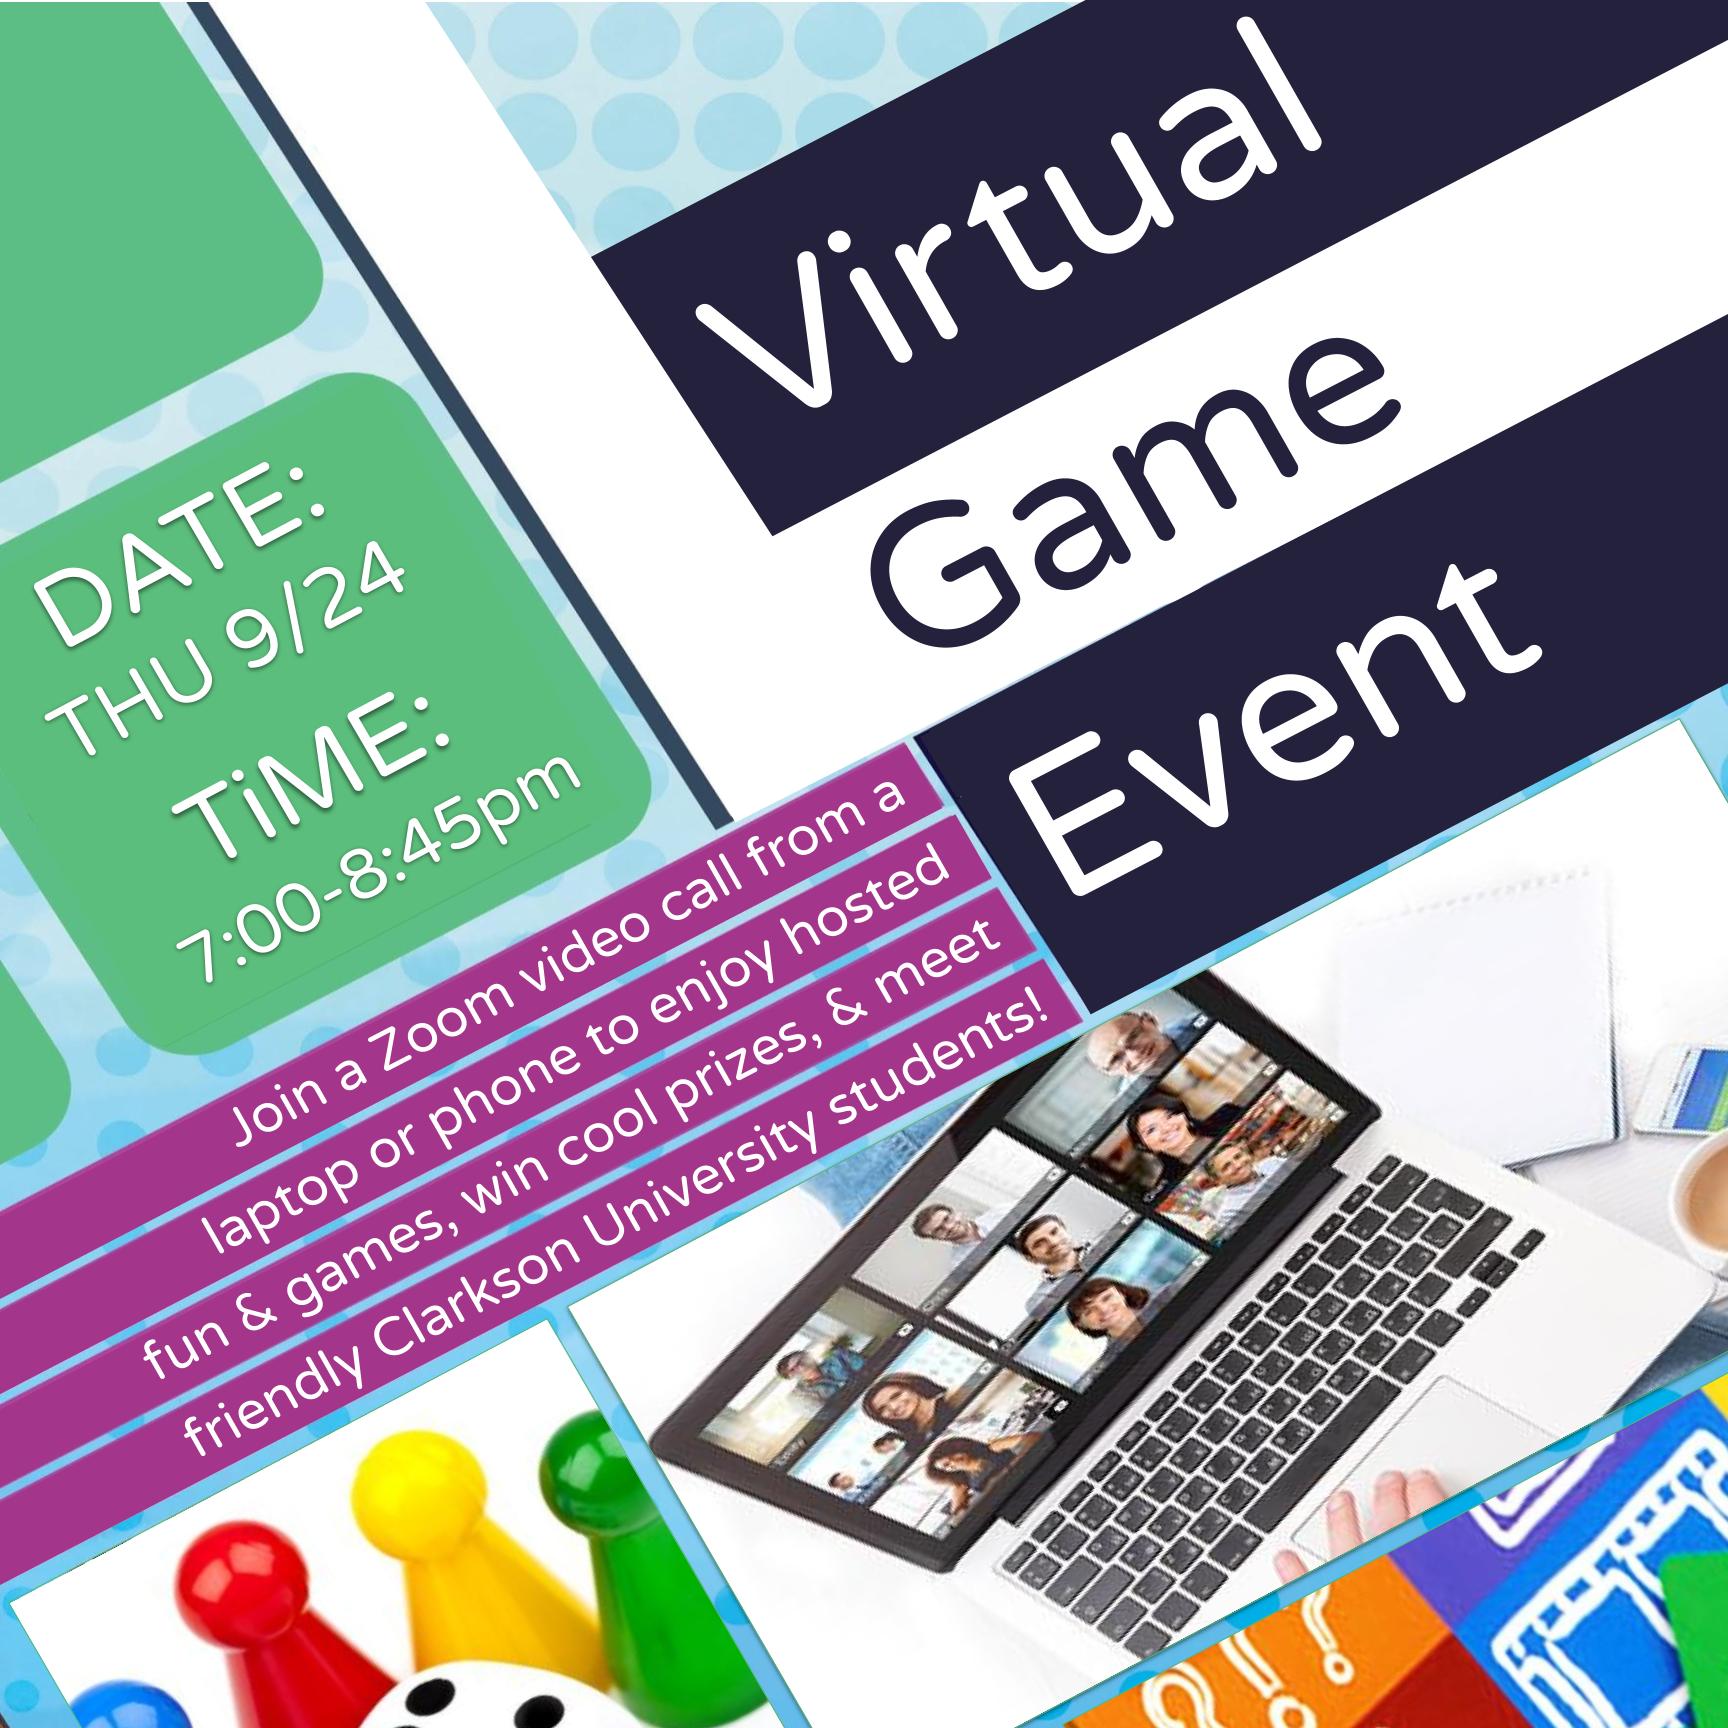 Virtual Game Night TONIGHT 9/24